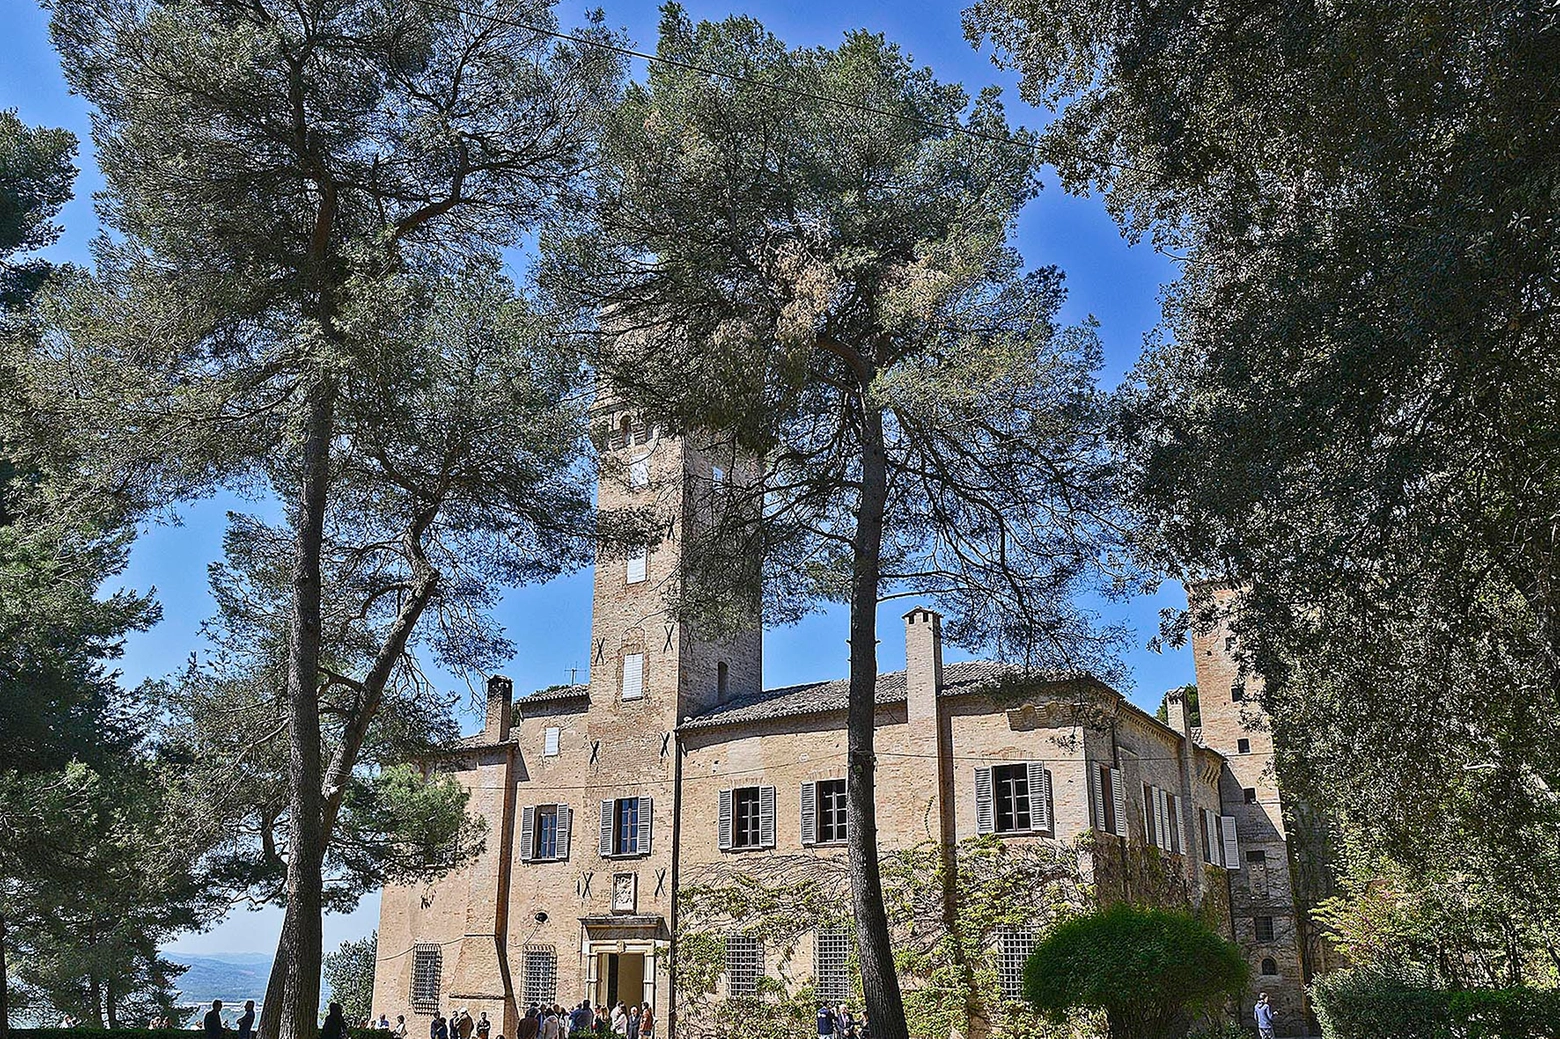 Villa Imperiale, Pesaro (foto Toni)